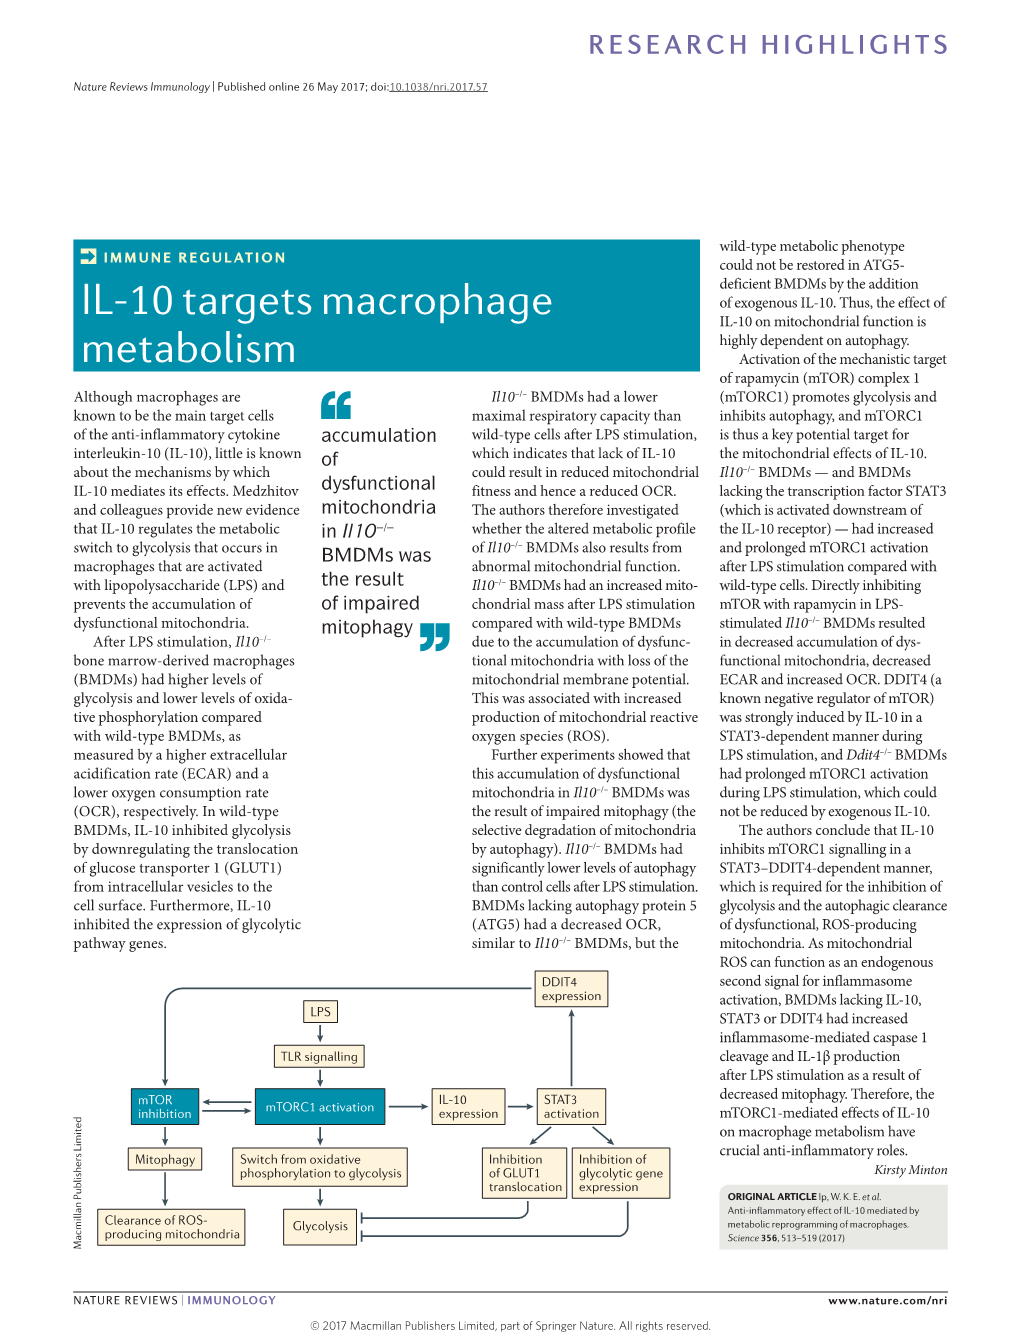 IL-10 Targets Macrophage Metabolism